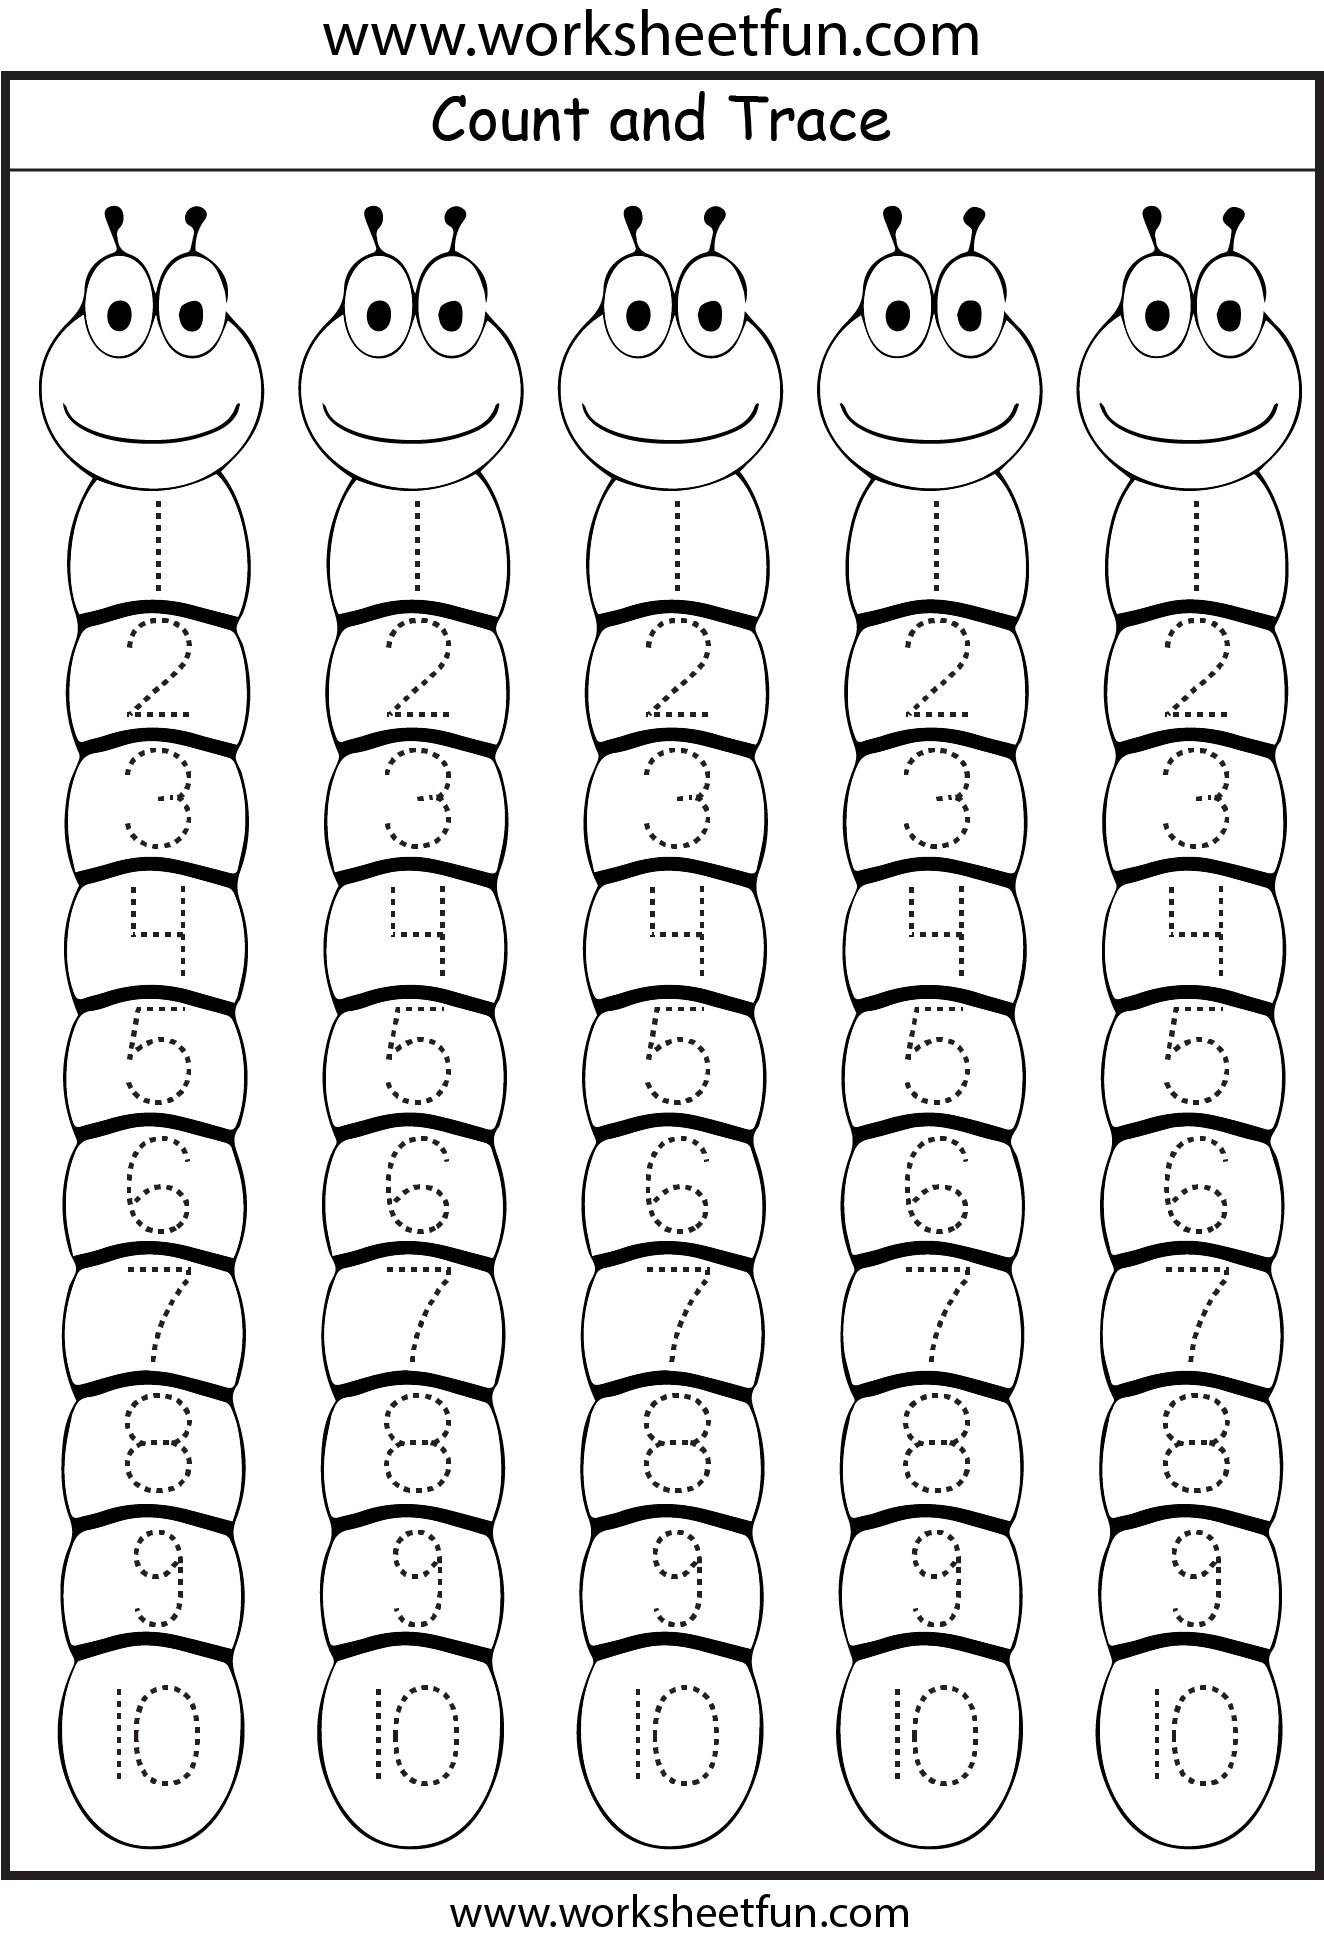 Preschool Tracing Numbers 1-10 Image